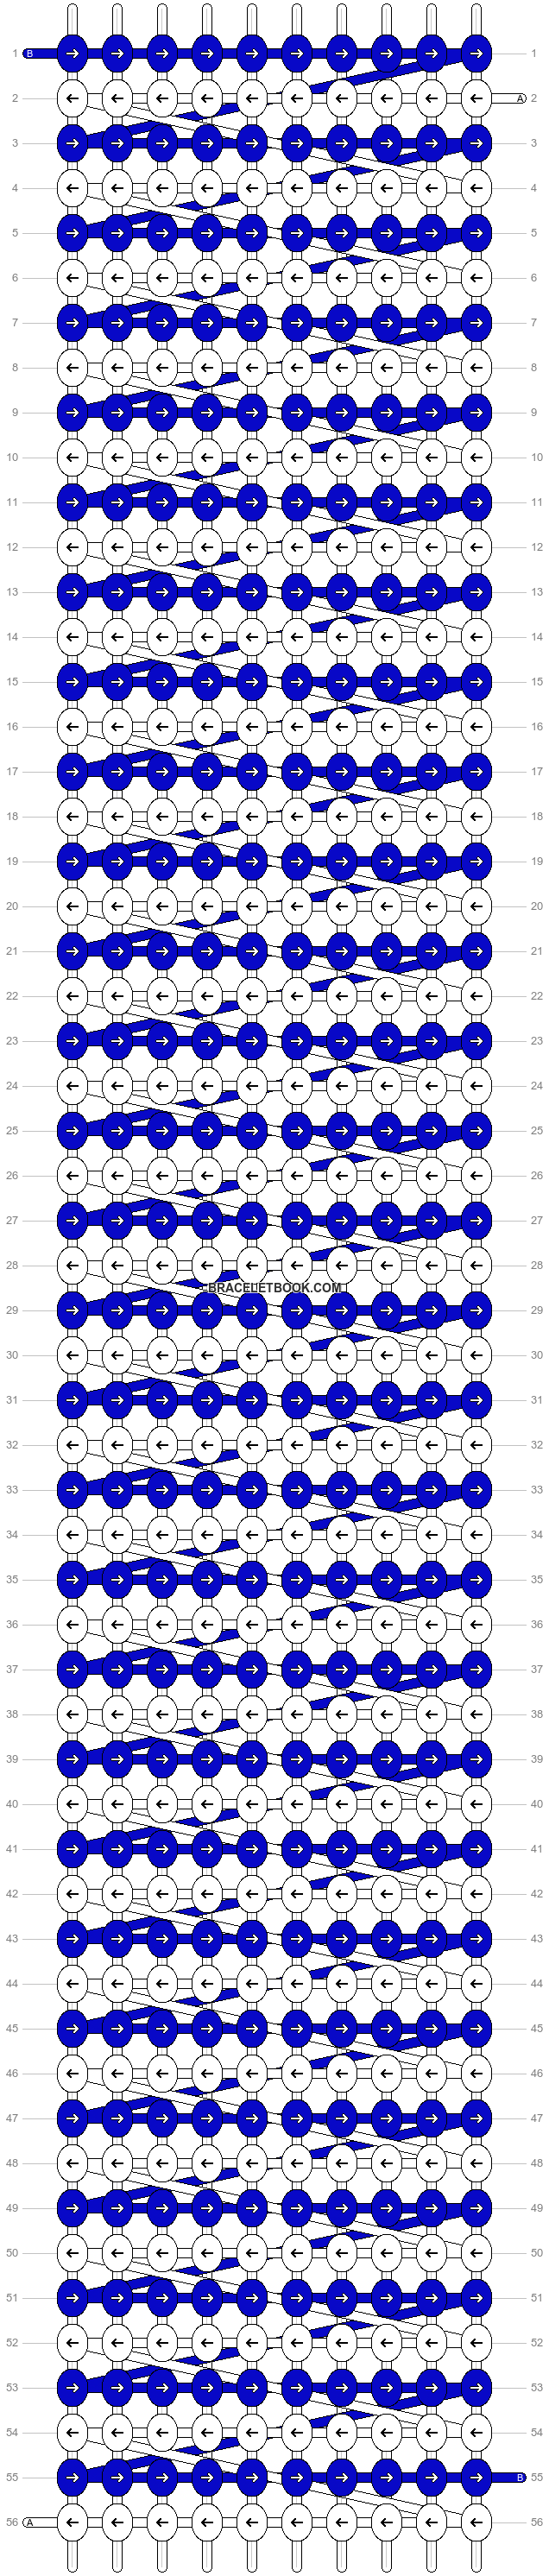 Alpha pattern #3879 variation #126560 pattern